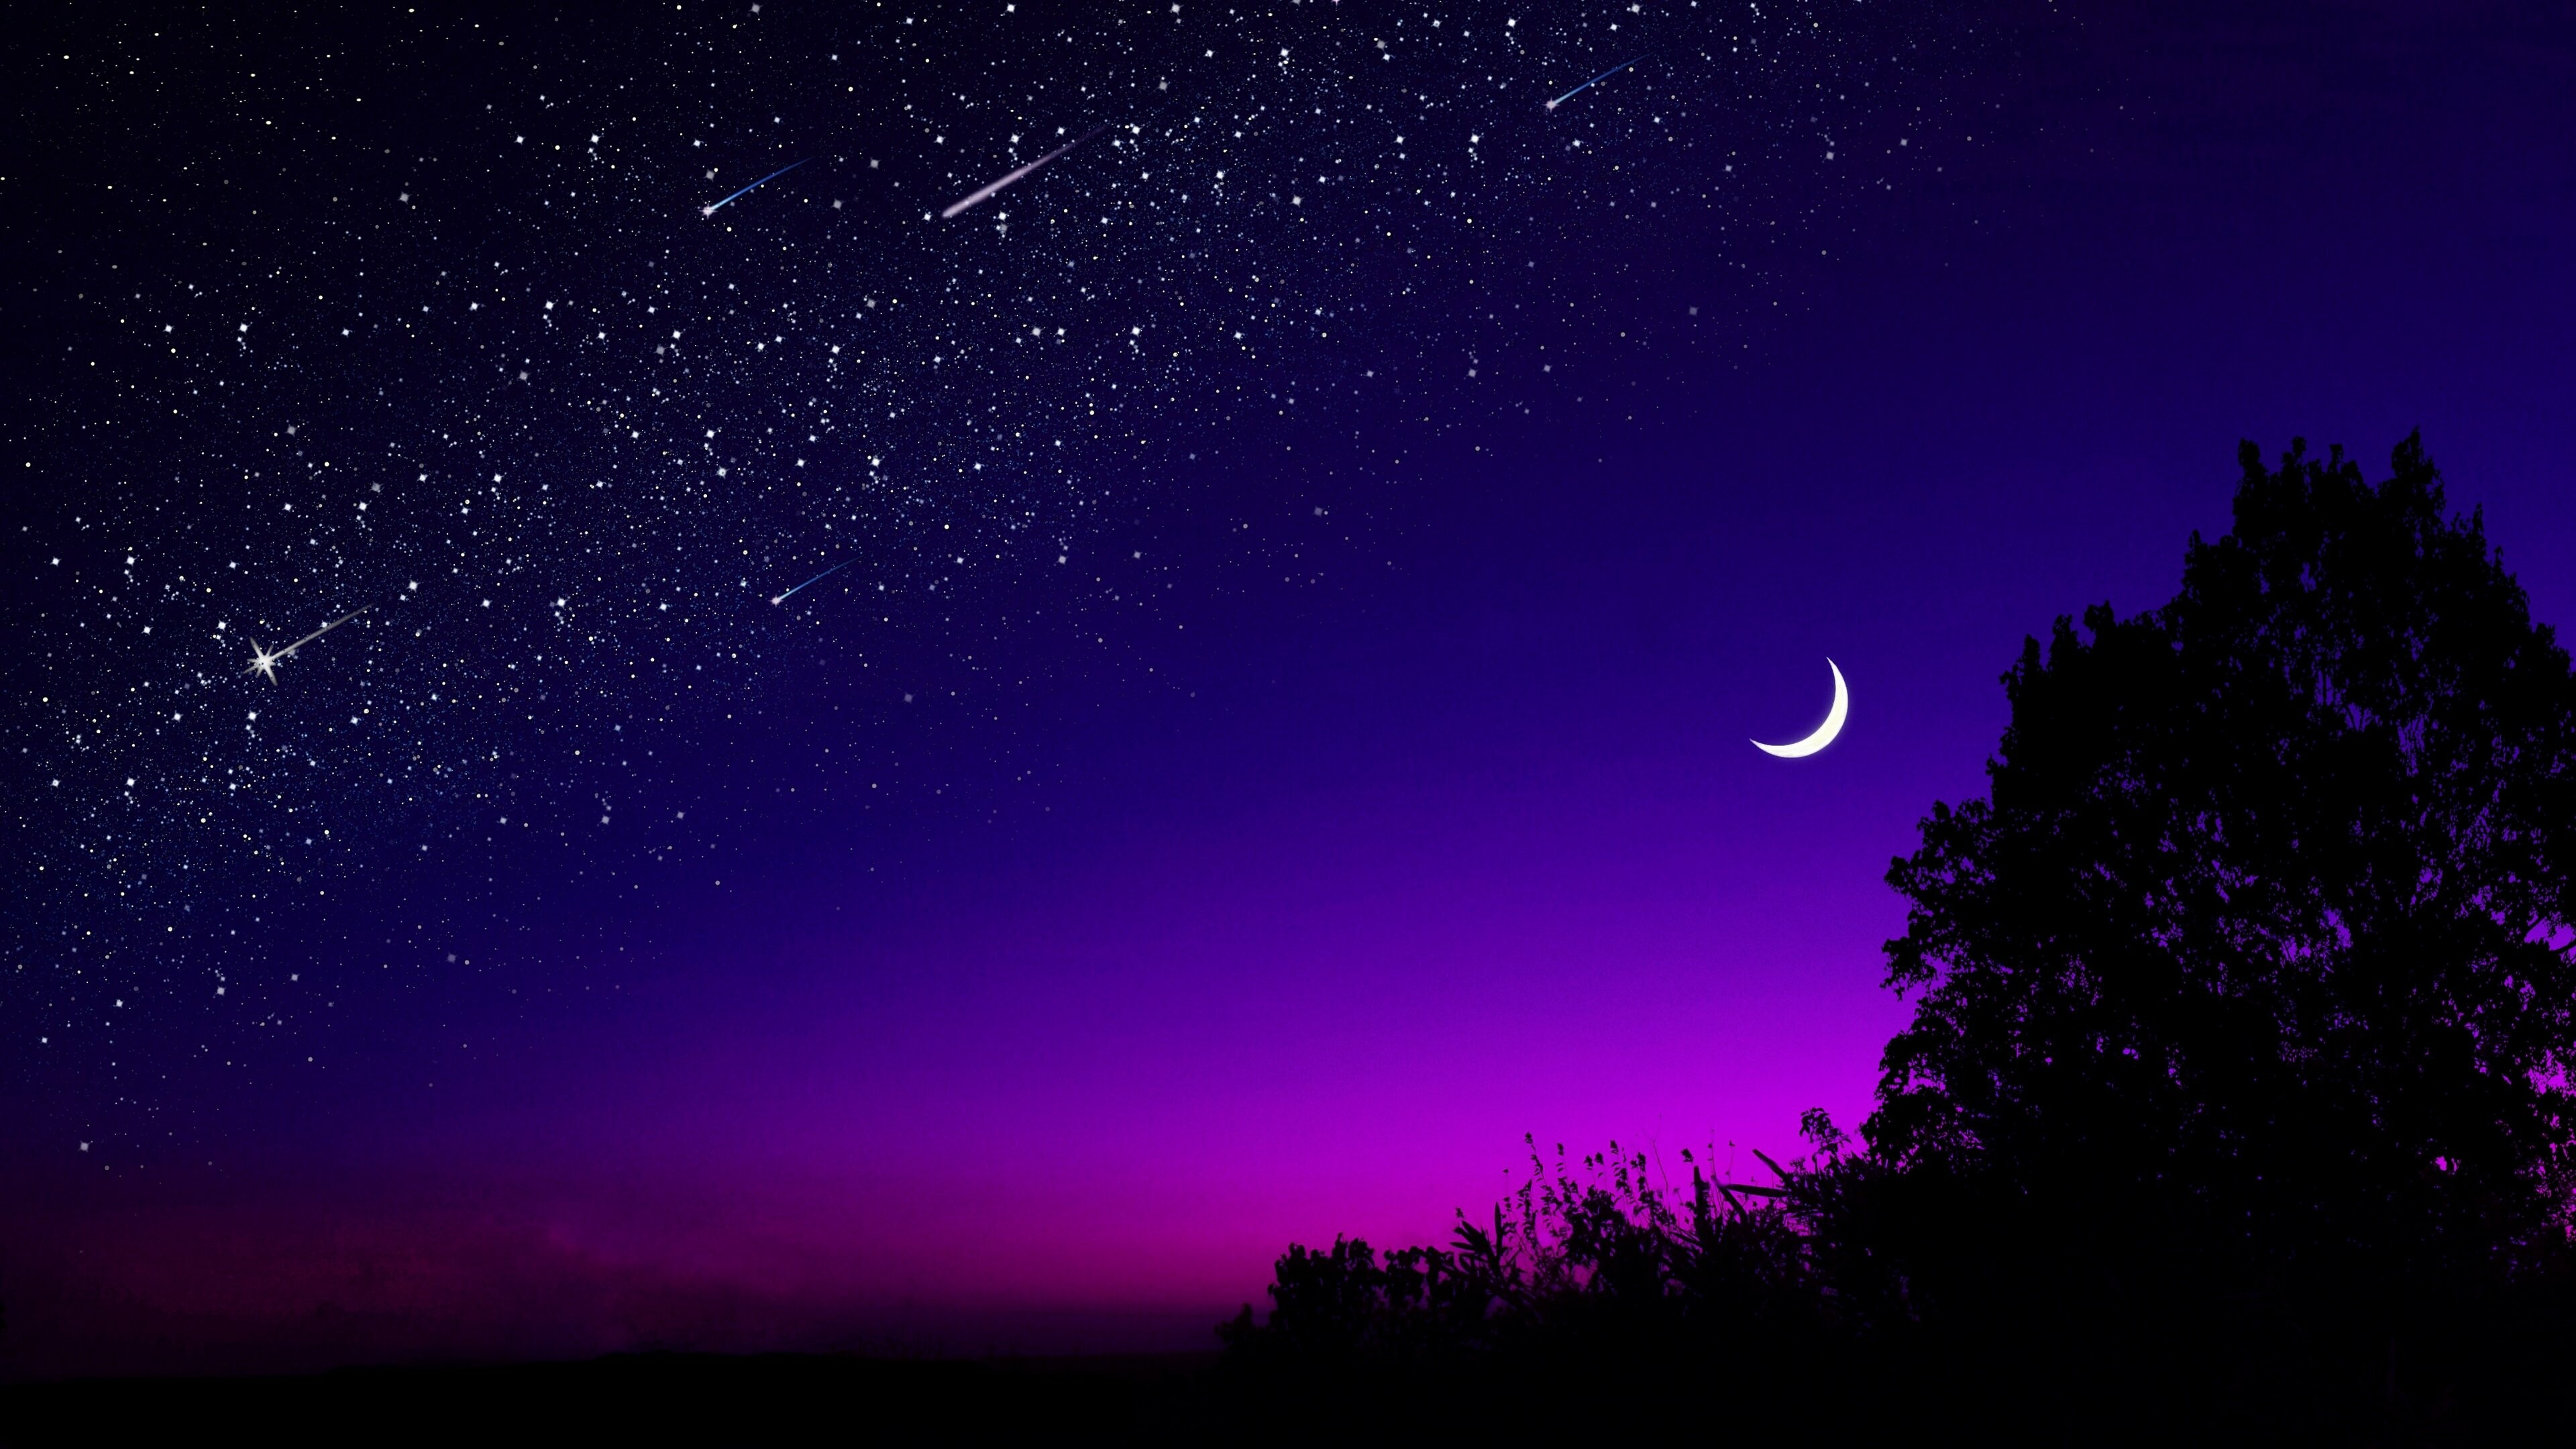 Moonlight: Night, Stars, Astronomical object. 3840x2160 4K Wallpaper.